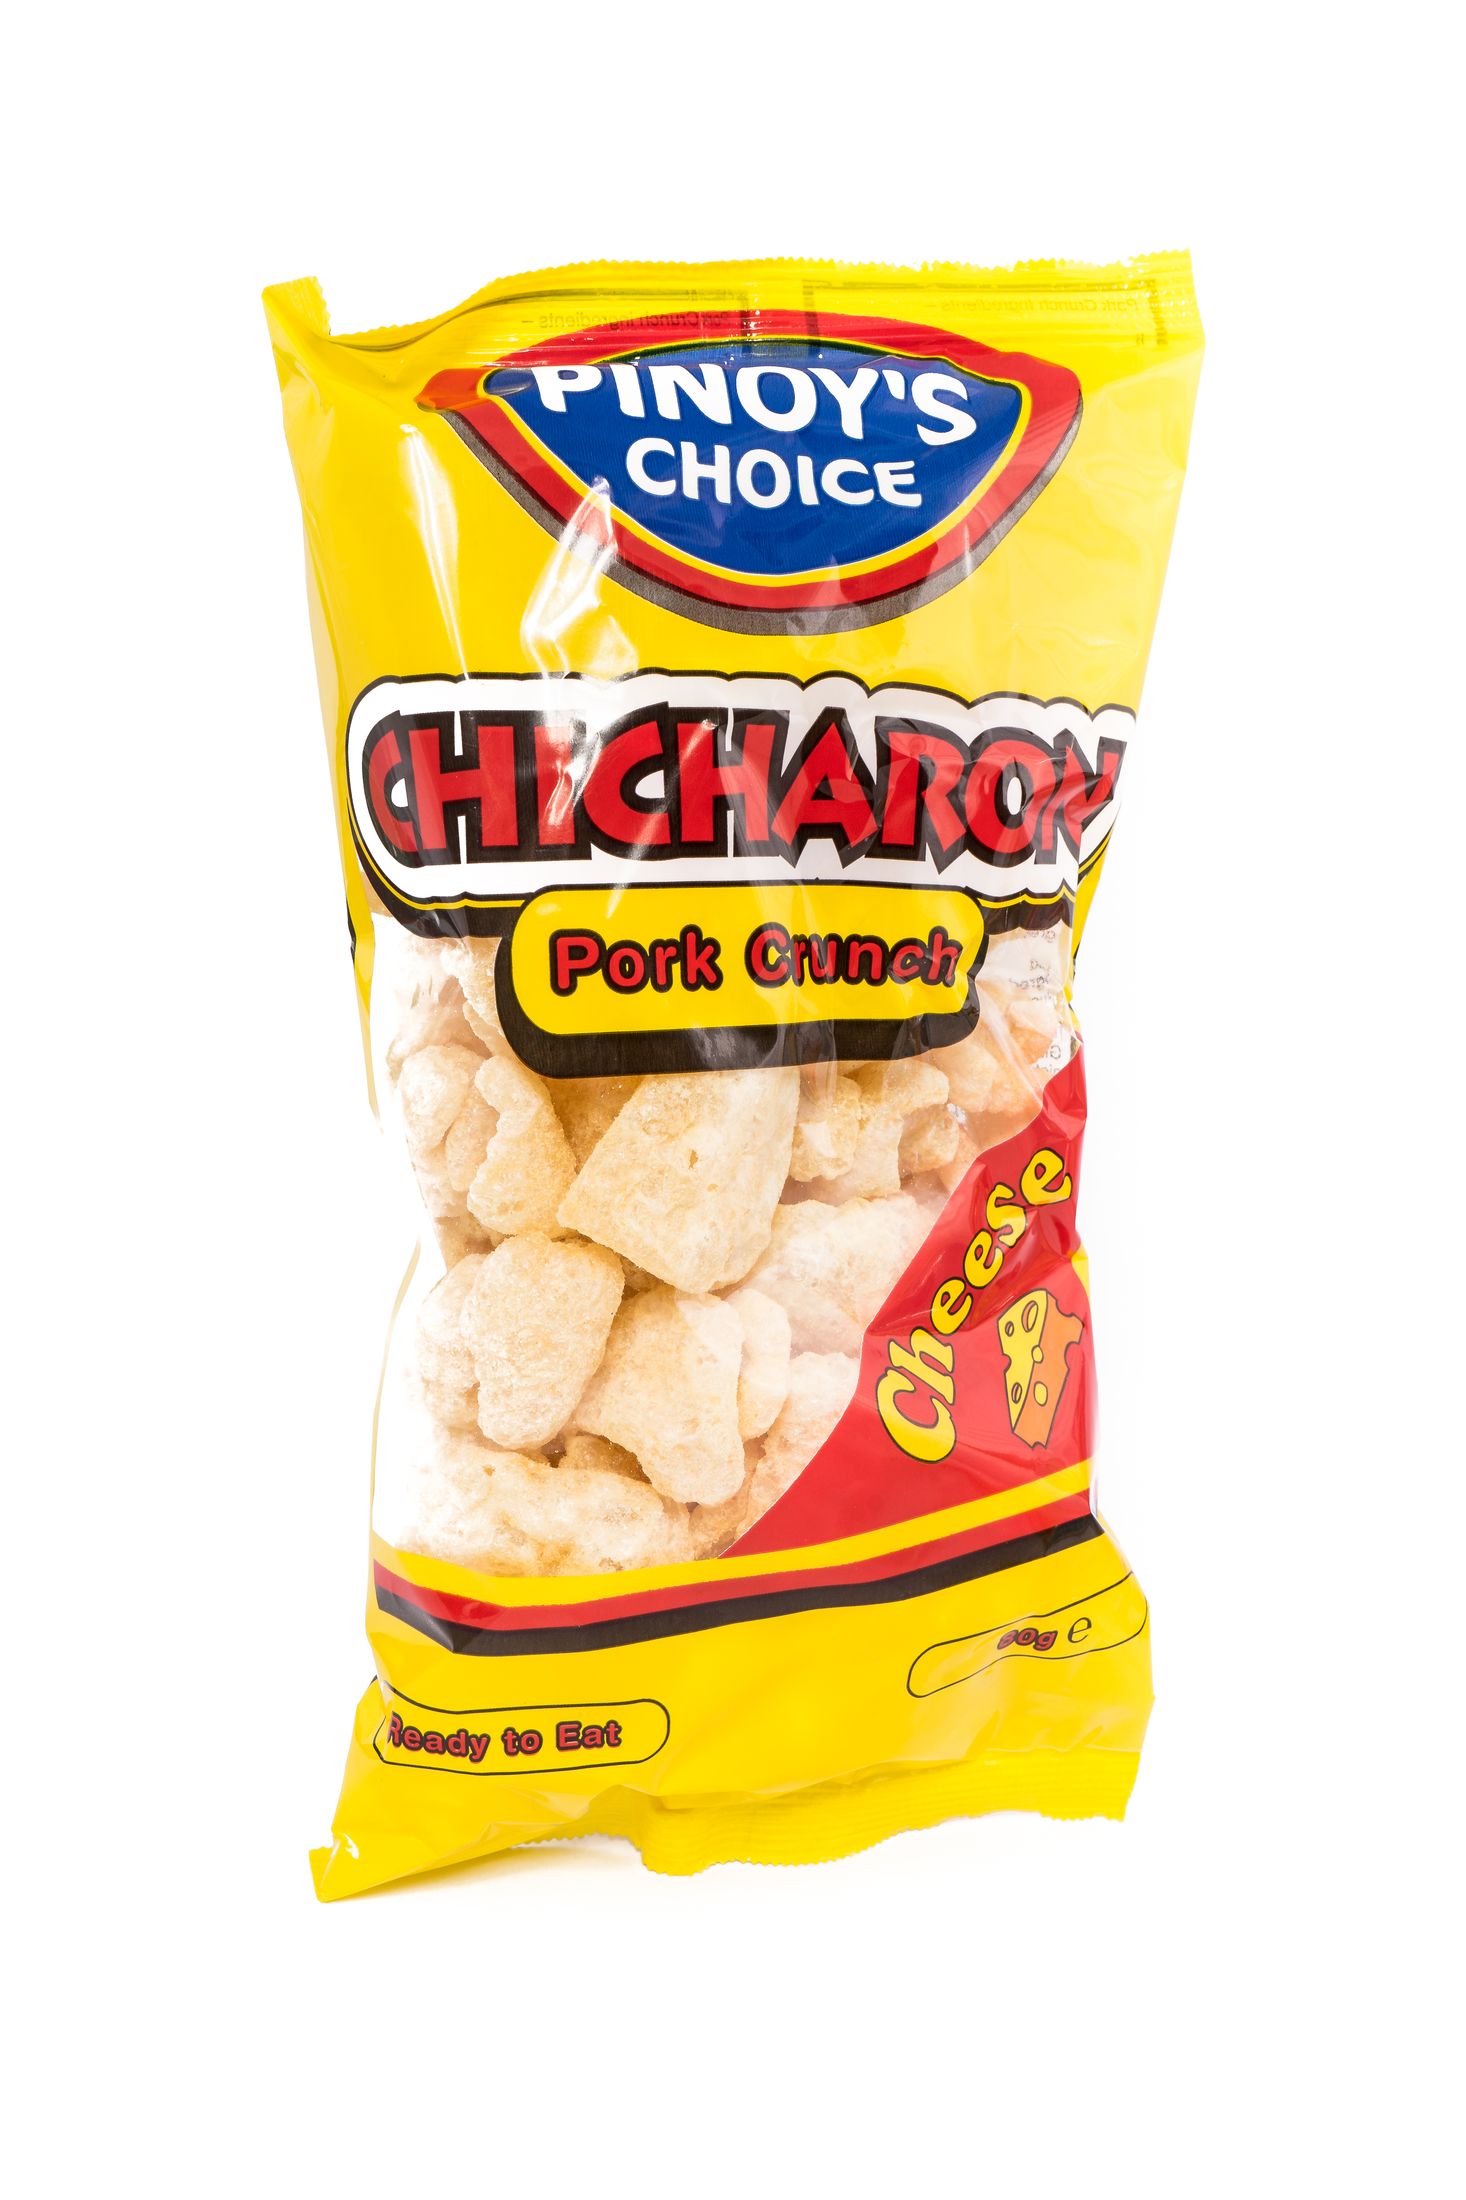 Pinoy's Choice Chicharon pork crunch cheese flavor